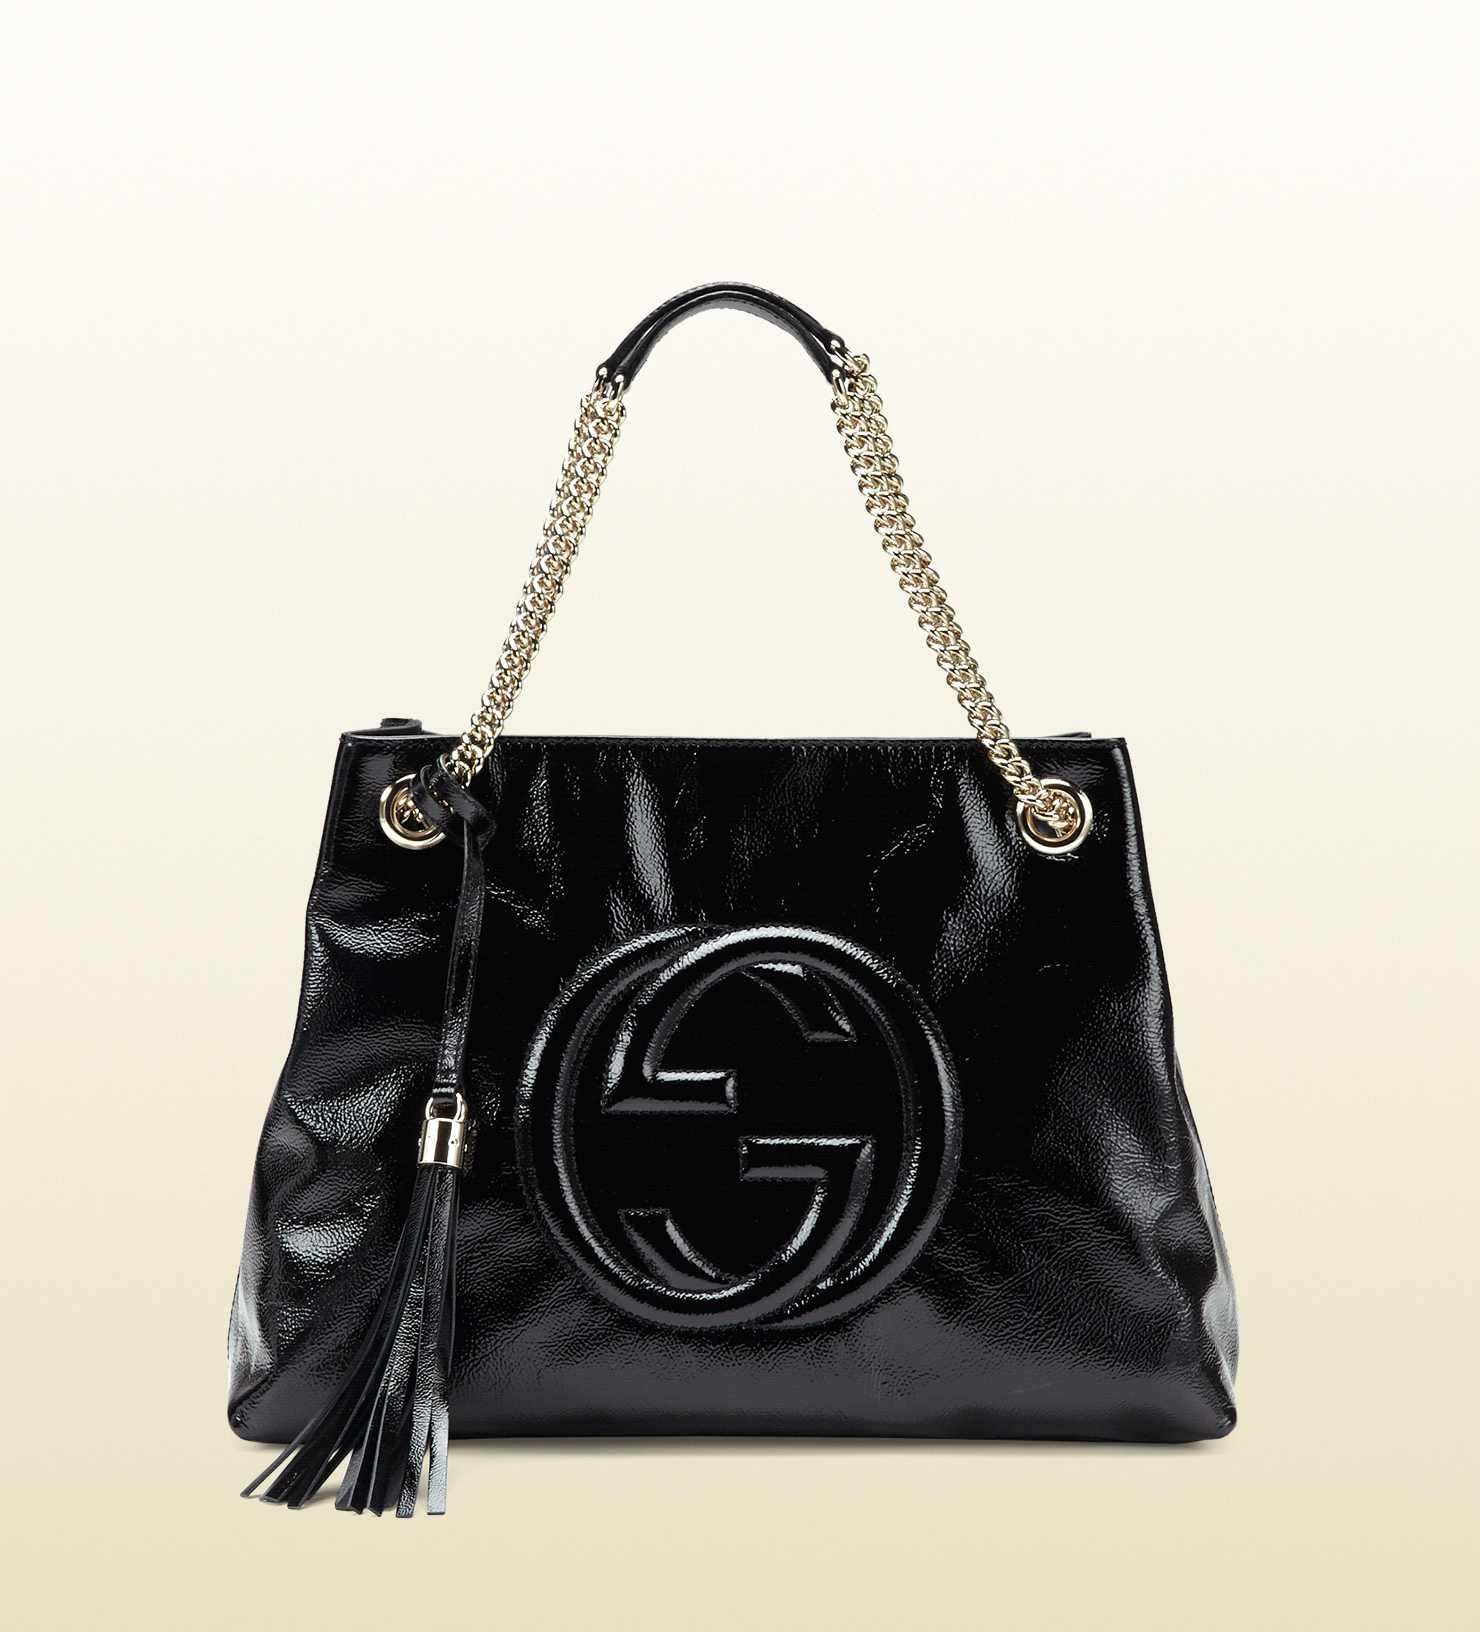 Lyst - Gucci Soho Soft Patent Leather Shoulder Bag in Black